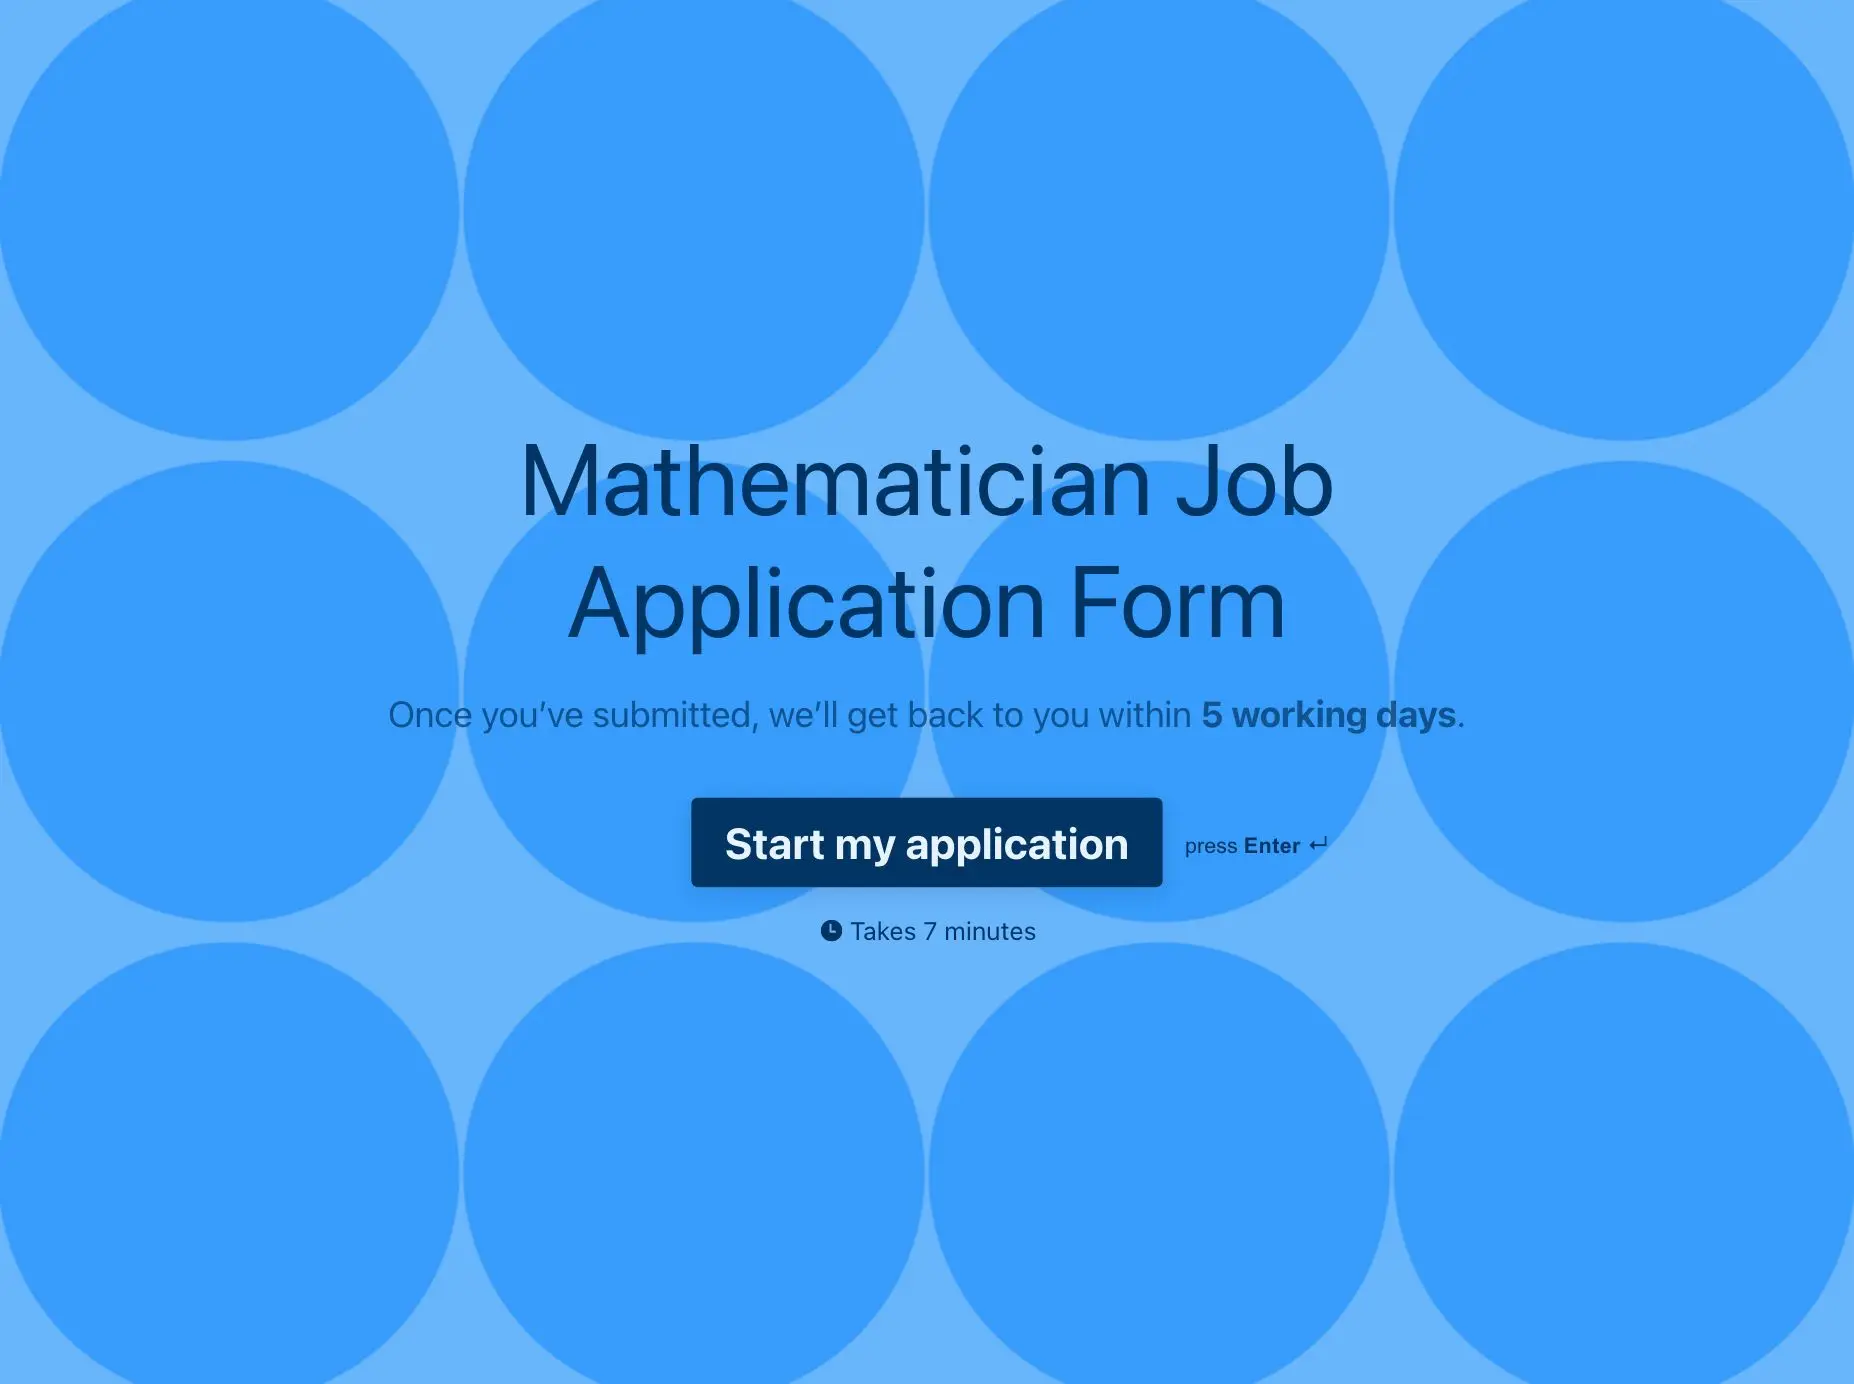 Mathematician Job Application Form Template Hero